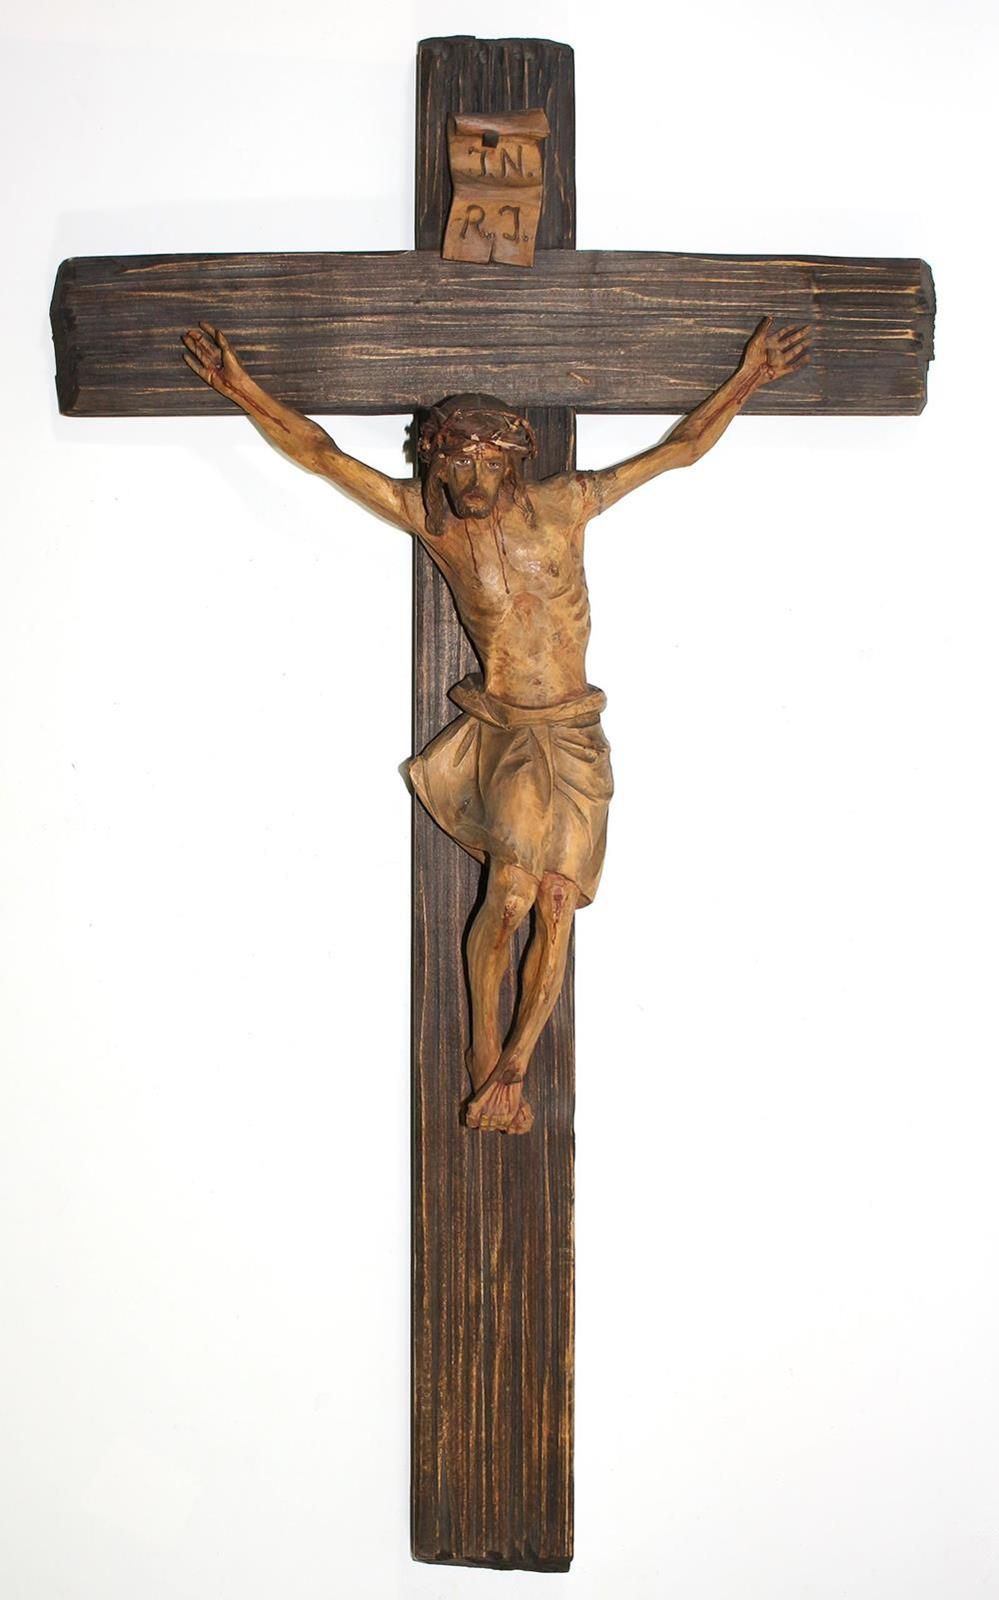 Christus, Offenburg. Wooden carving figure of the Offenburg artist & sculptor Pe&hellip;